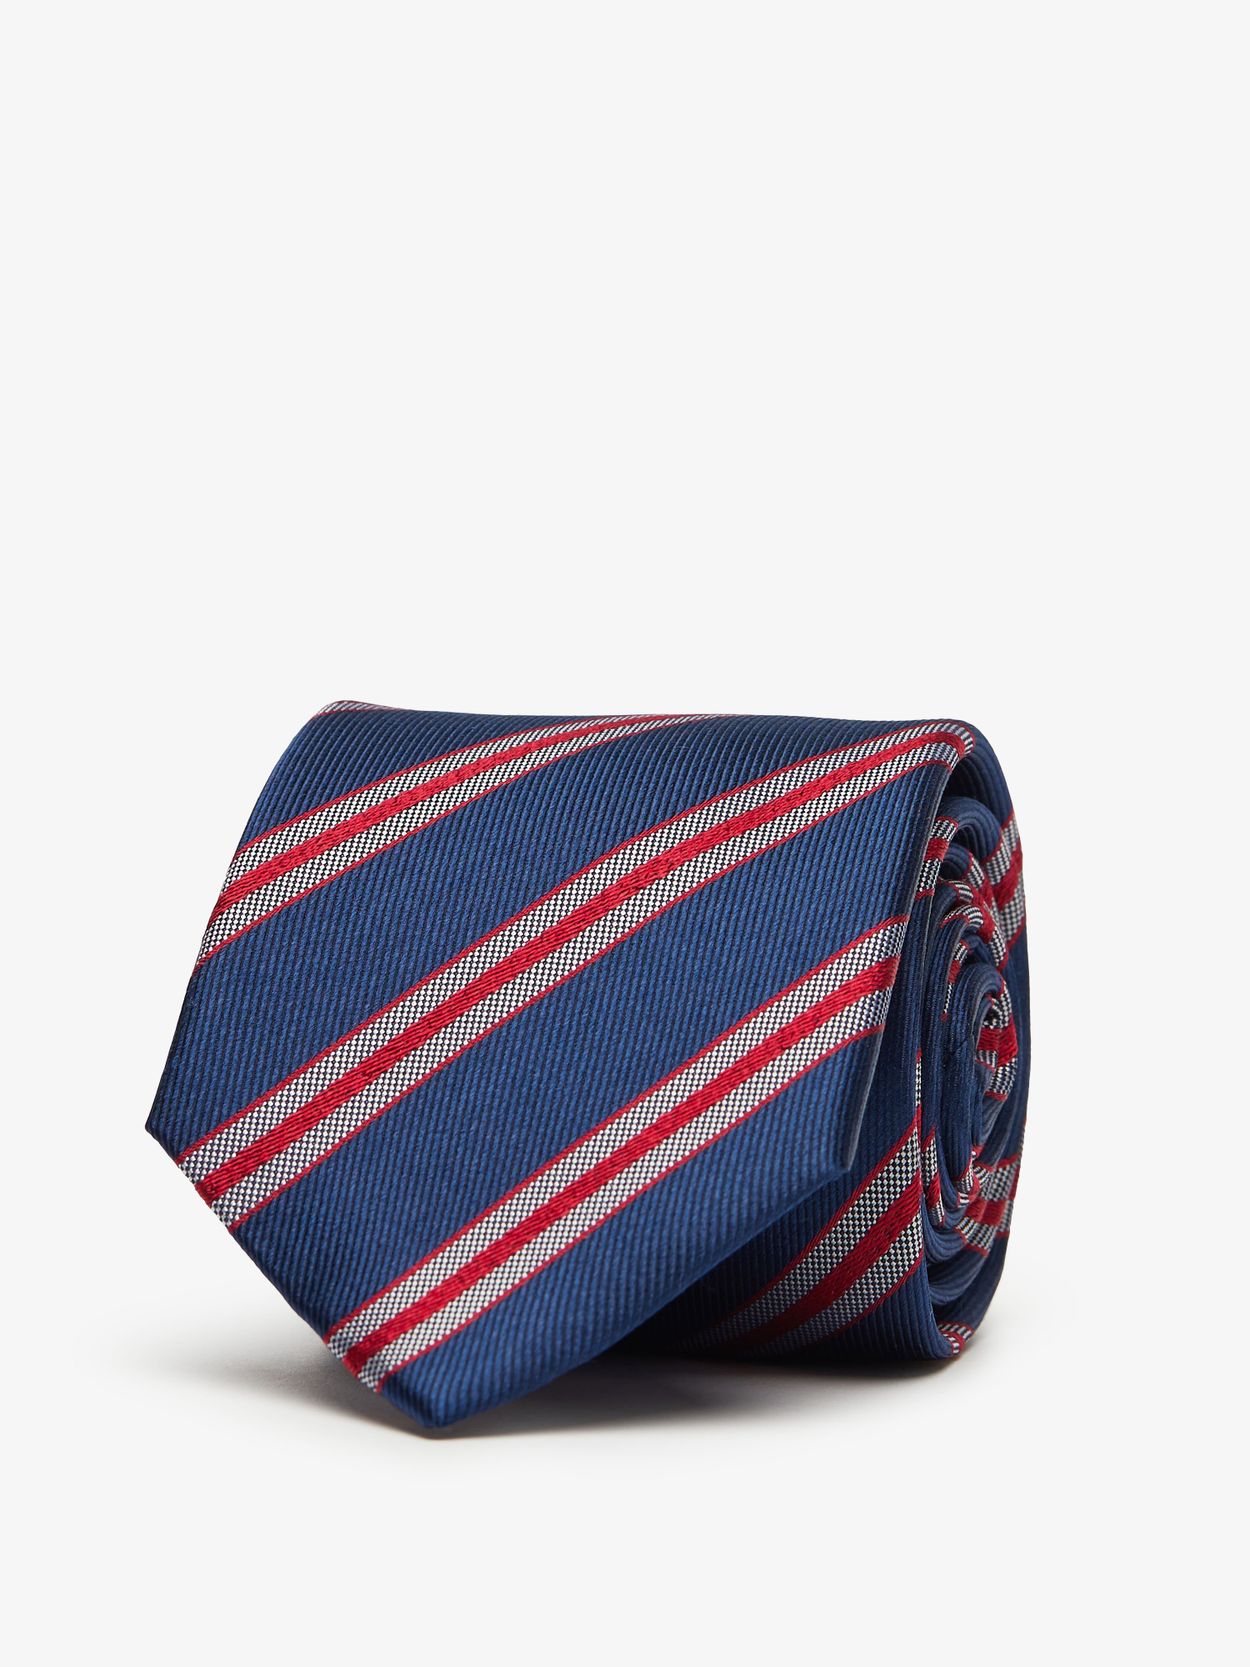 Blue & Red Tie Striped 